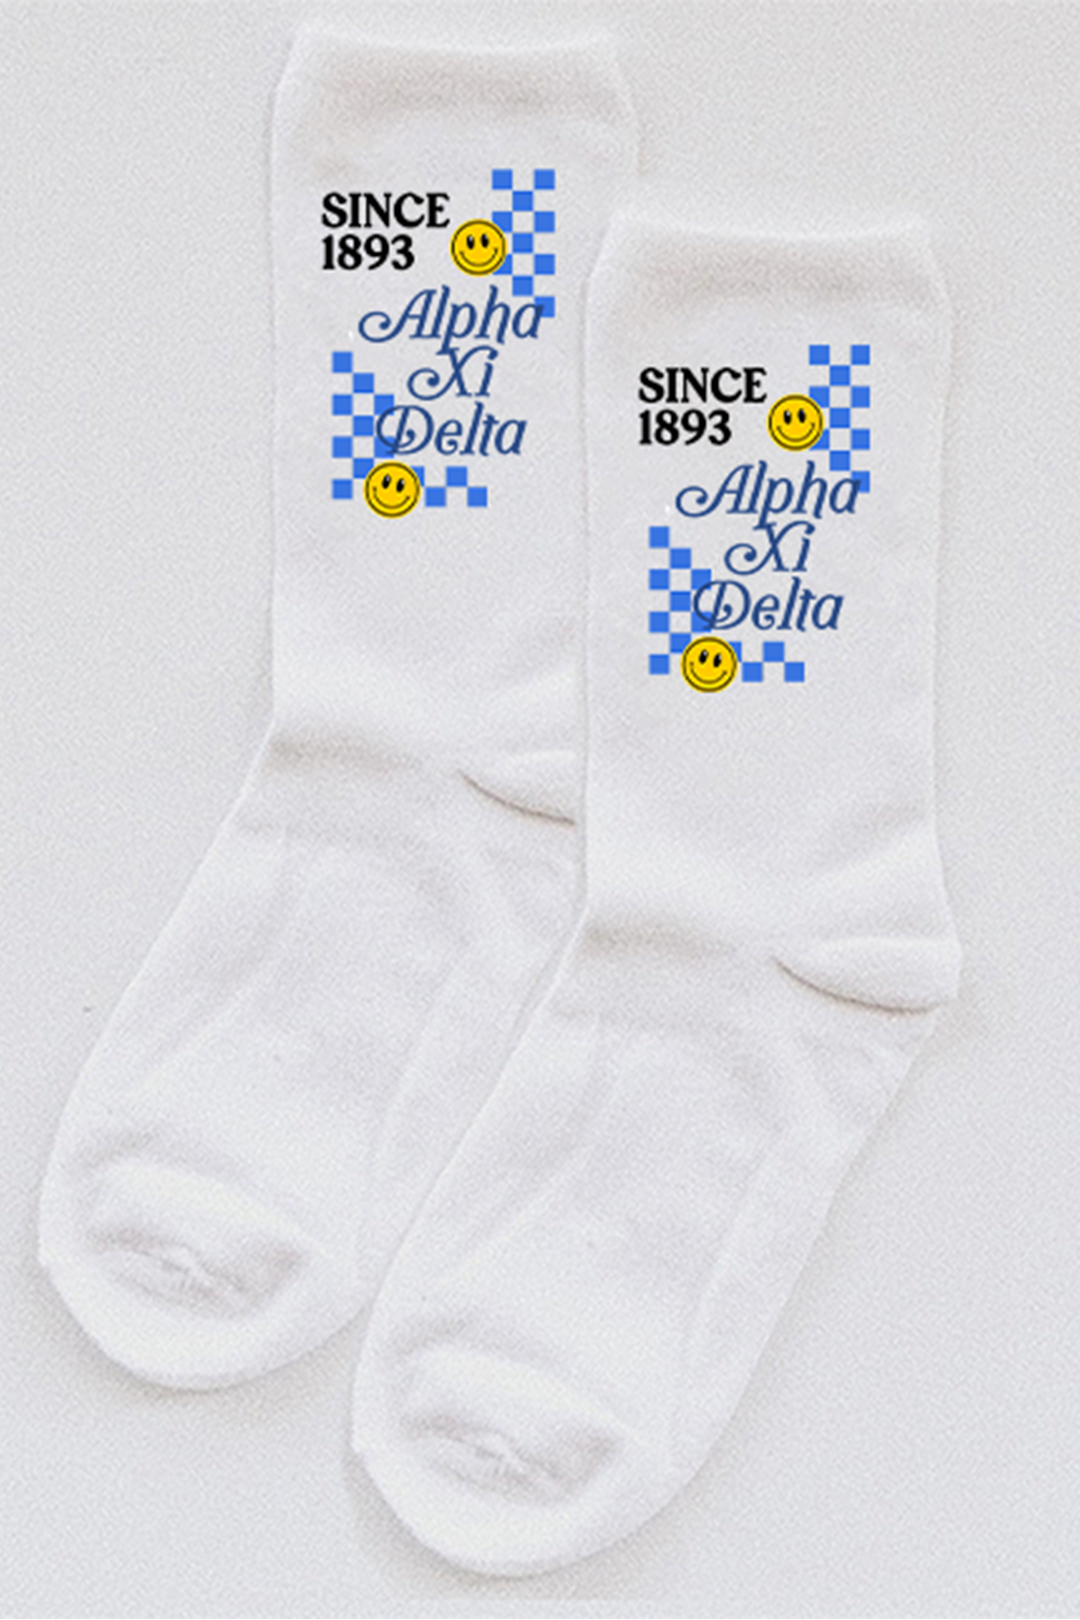 Blue Checkered socks - Alpha Xi Delta